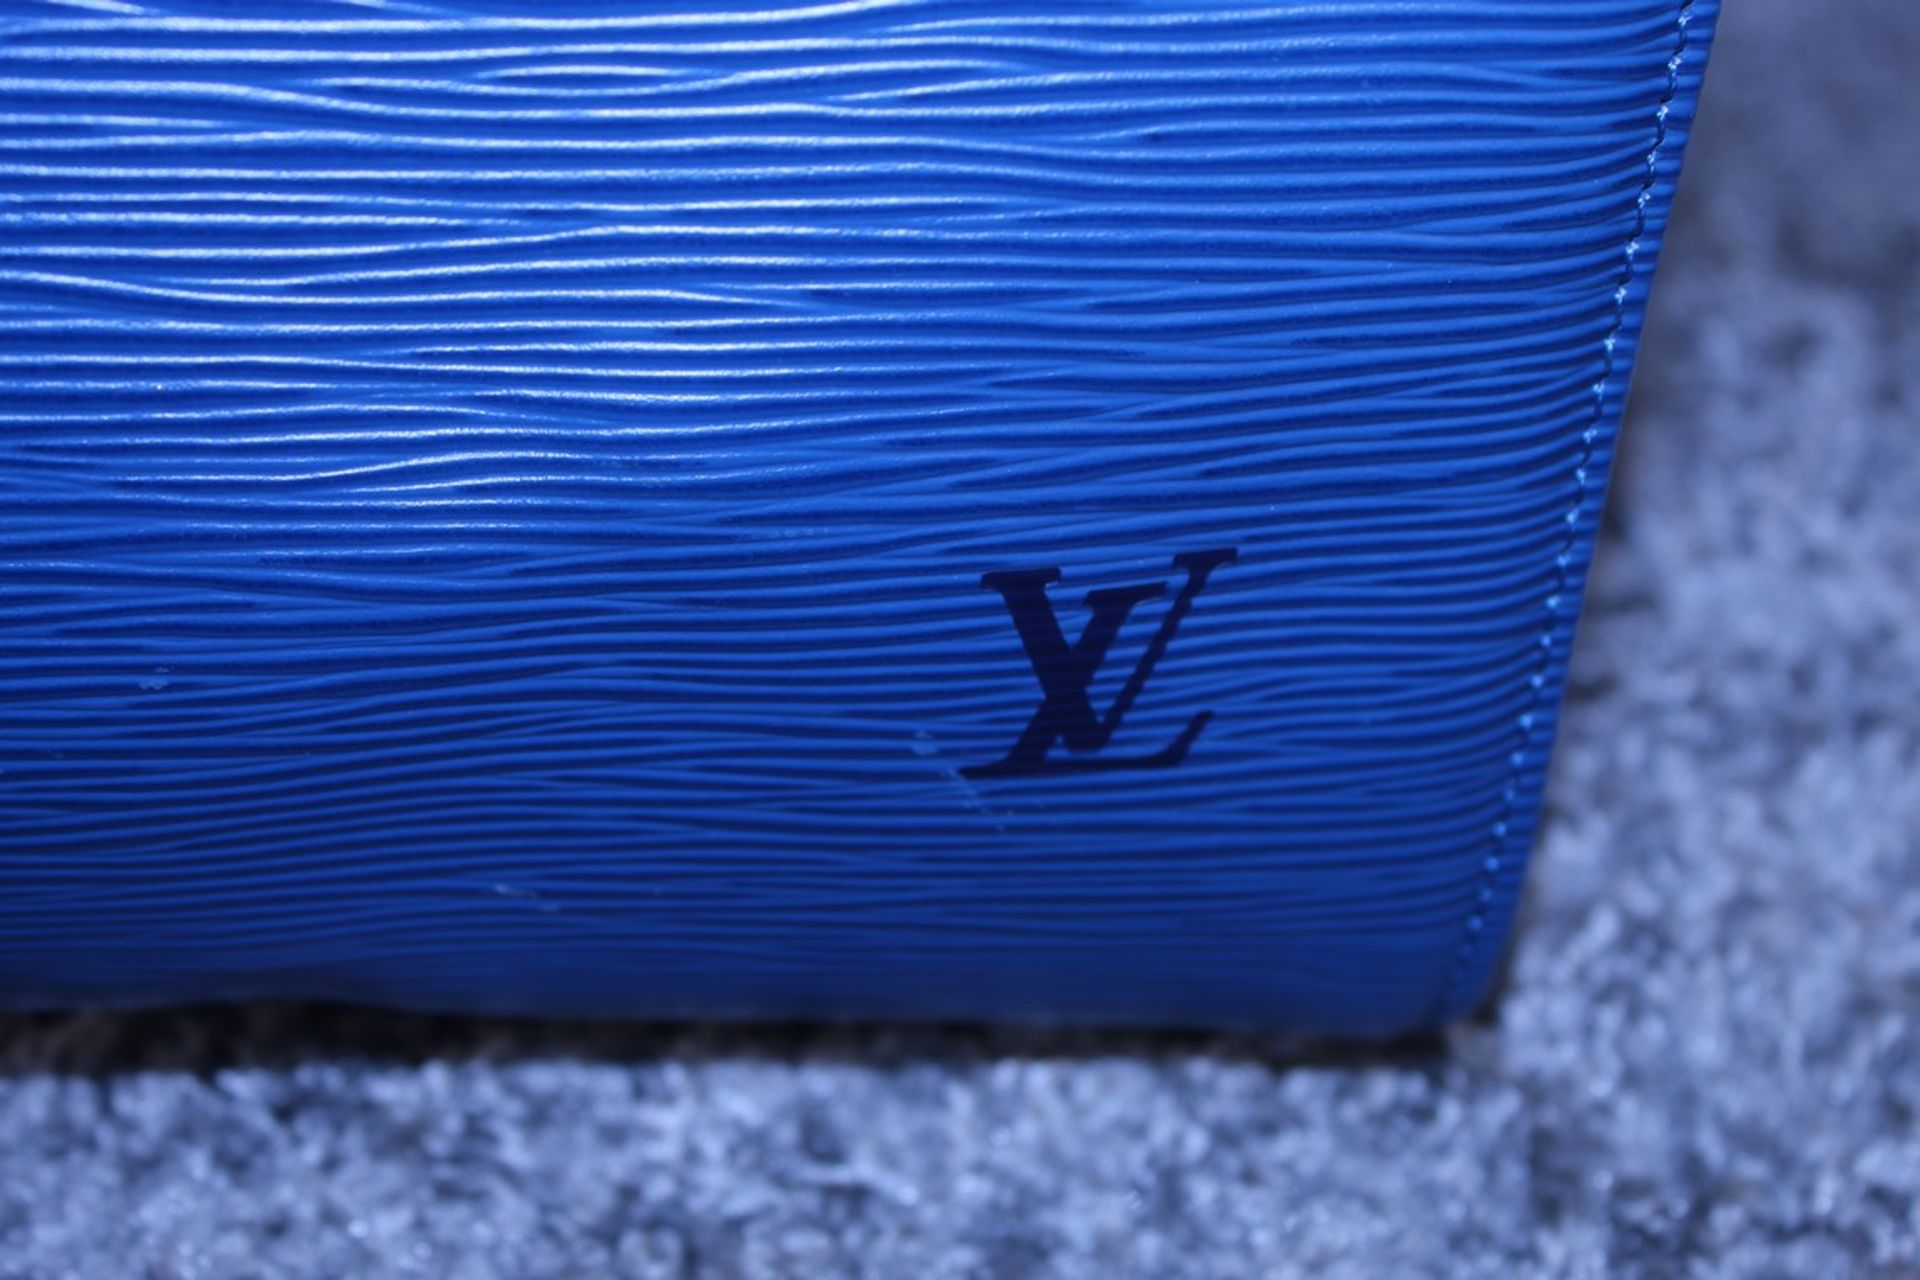 Rrp £1,000 Louis Vuitton Speedy Handbag - Image 4 of 5